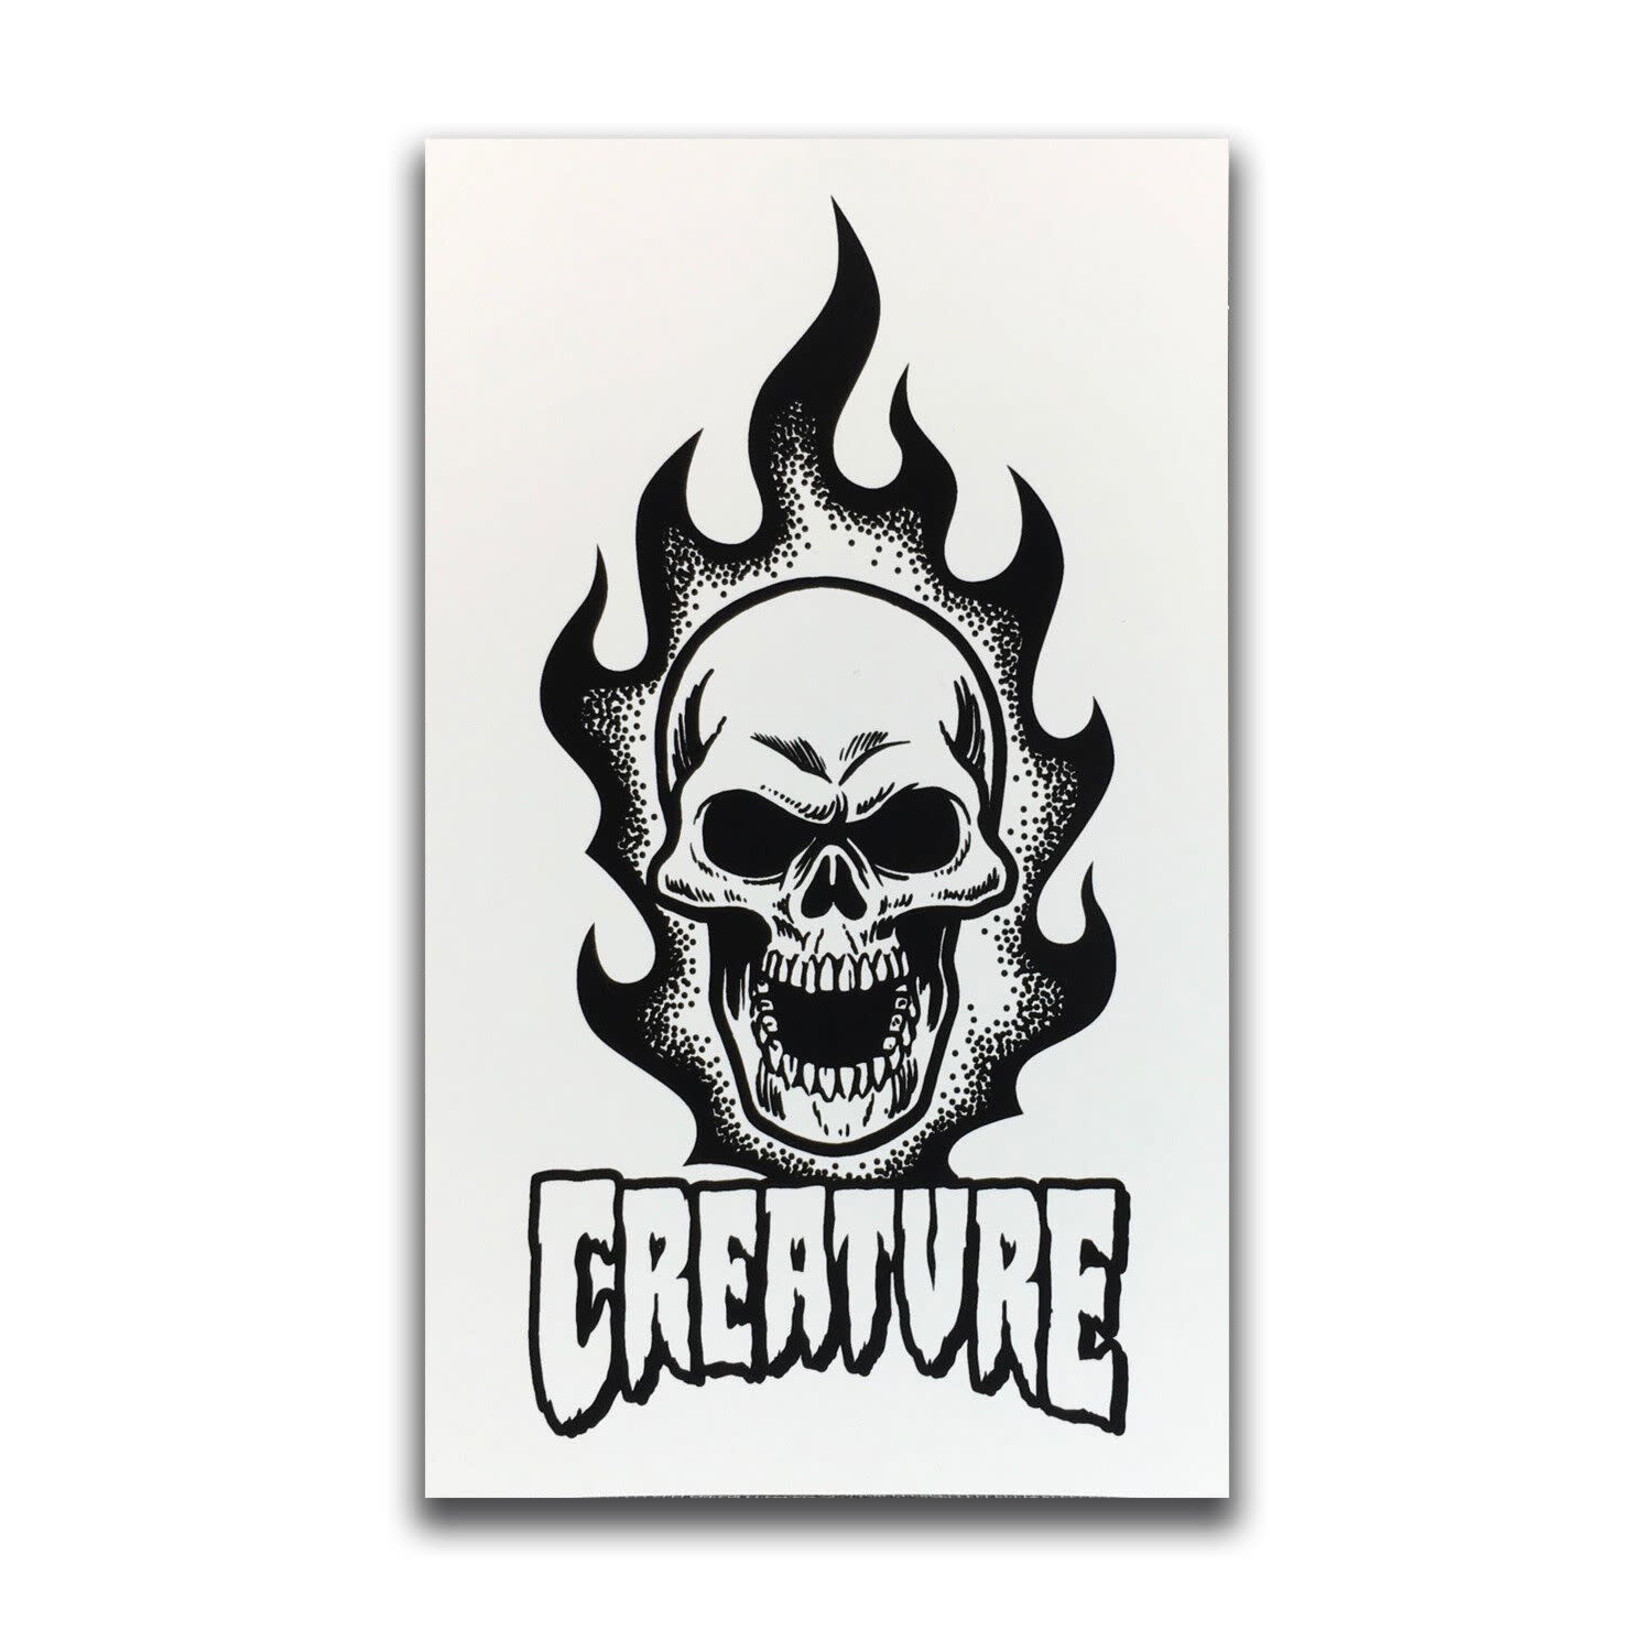 Creature Creature Bonehead Sticker - 6.75" x 4" - Assorted (Vintage)